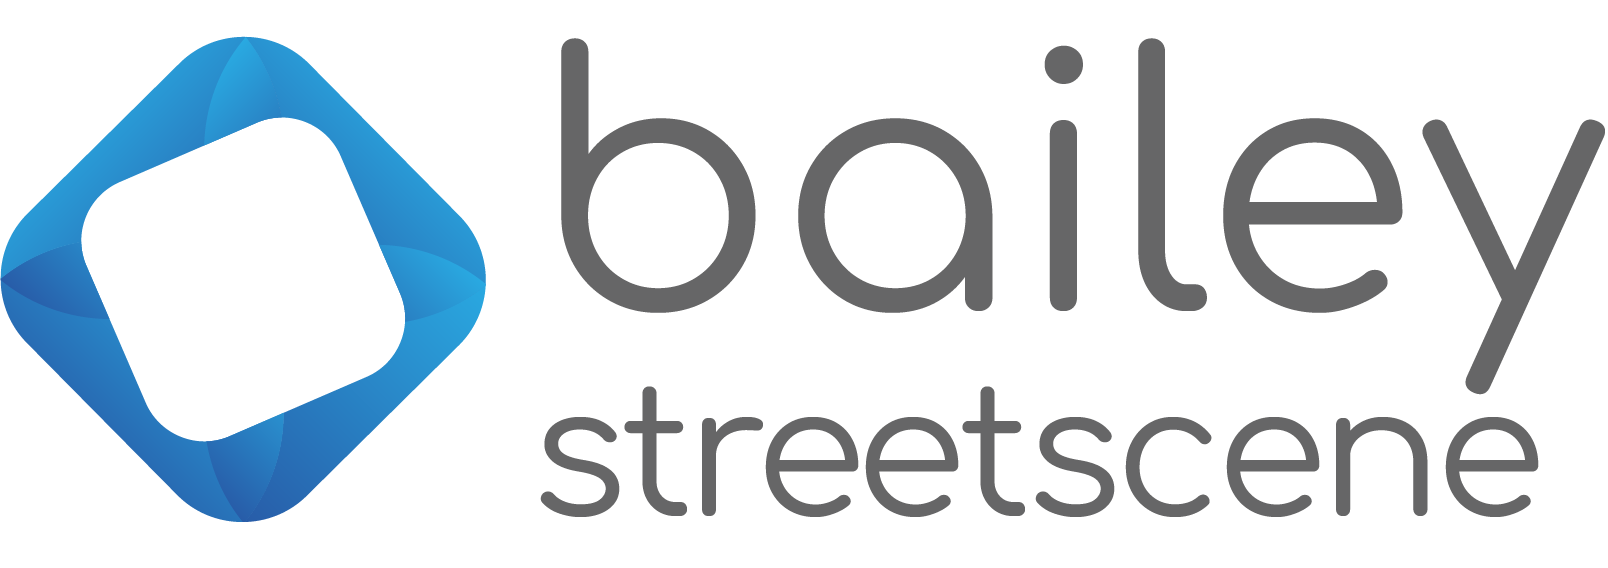 Bailey Streetscene limited